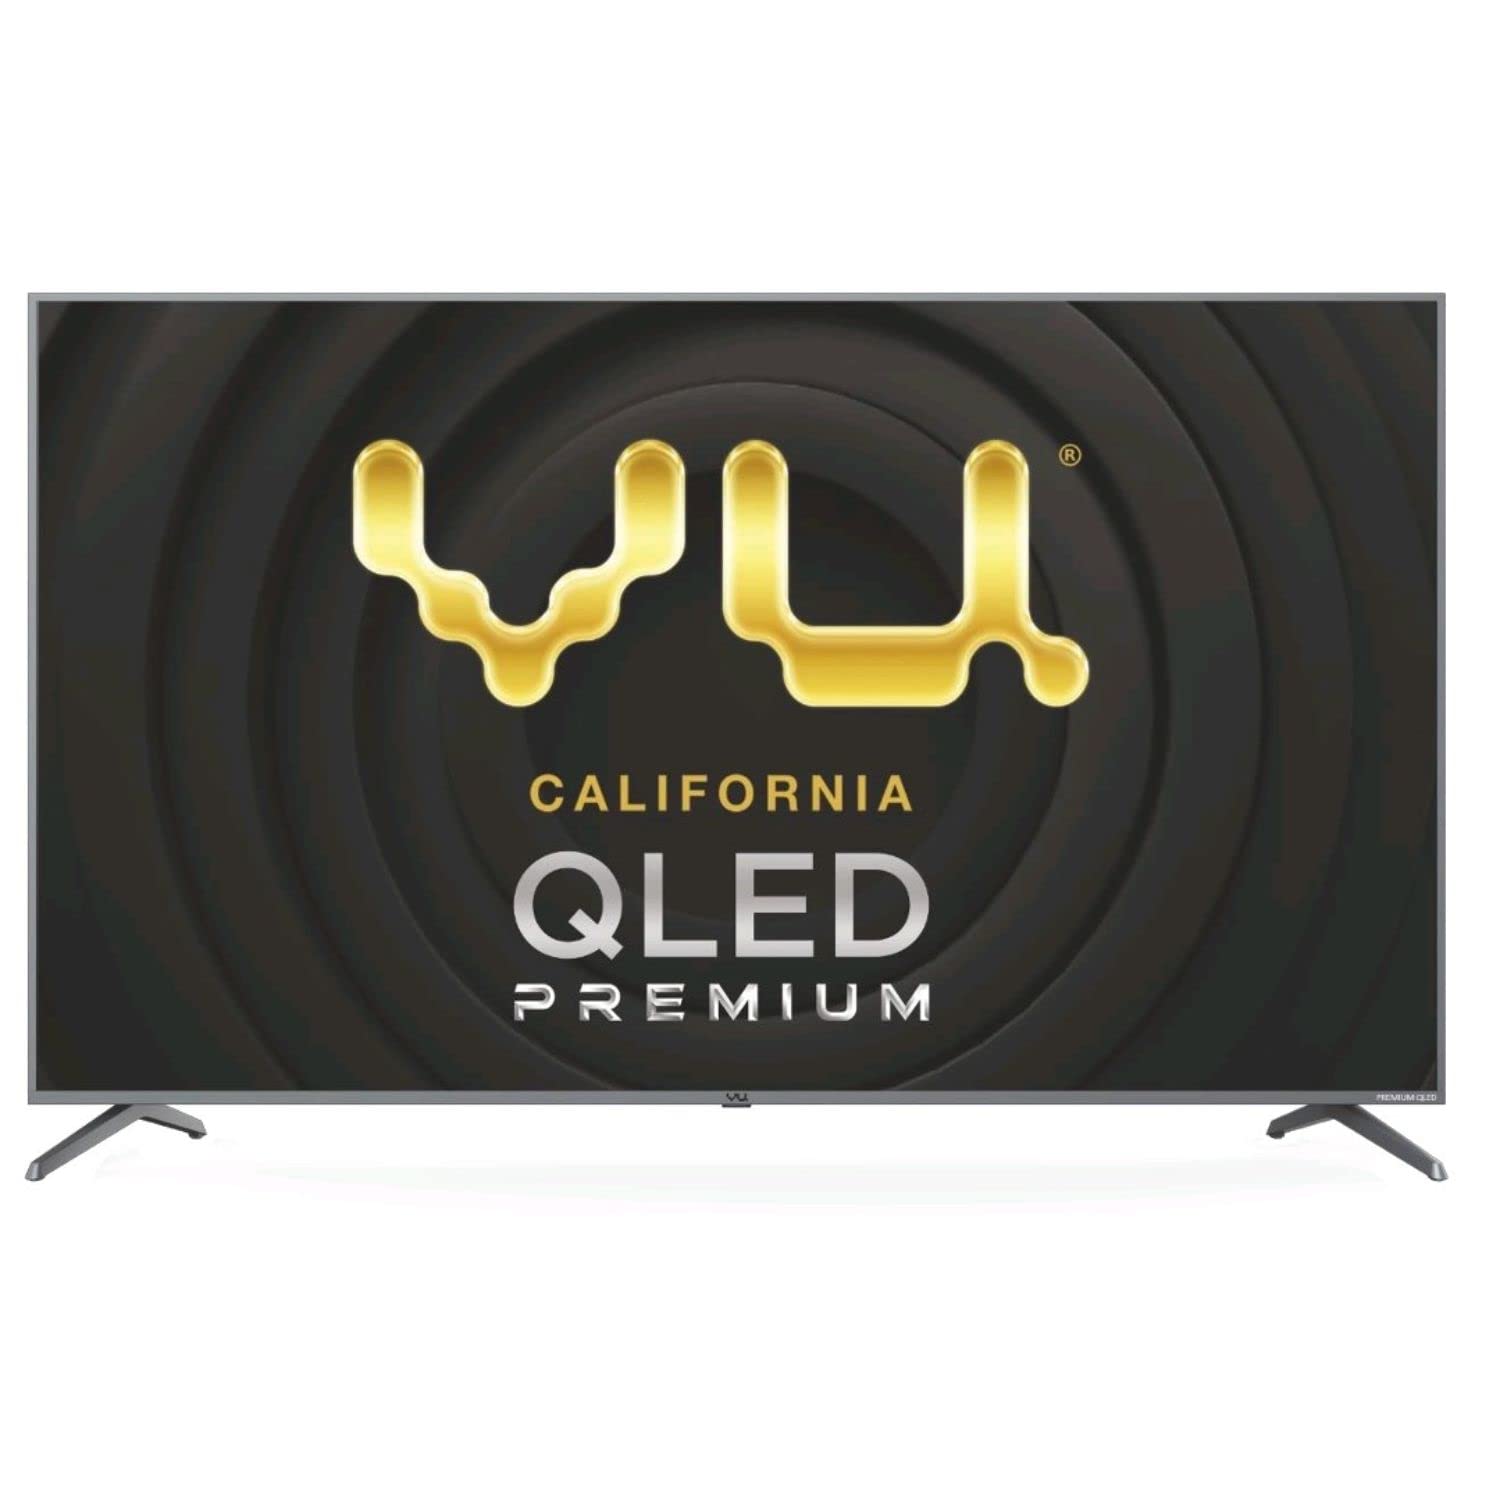 VU 75QPC QLED Premium 4K Dot Android Smart TV 3 Yrs Warranty